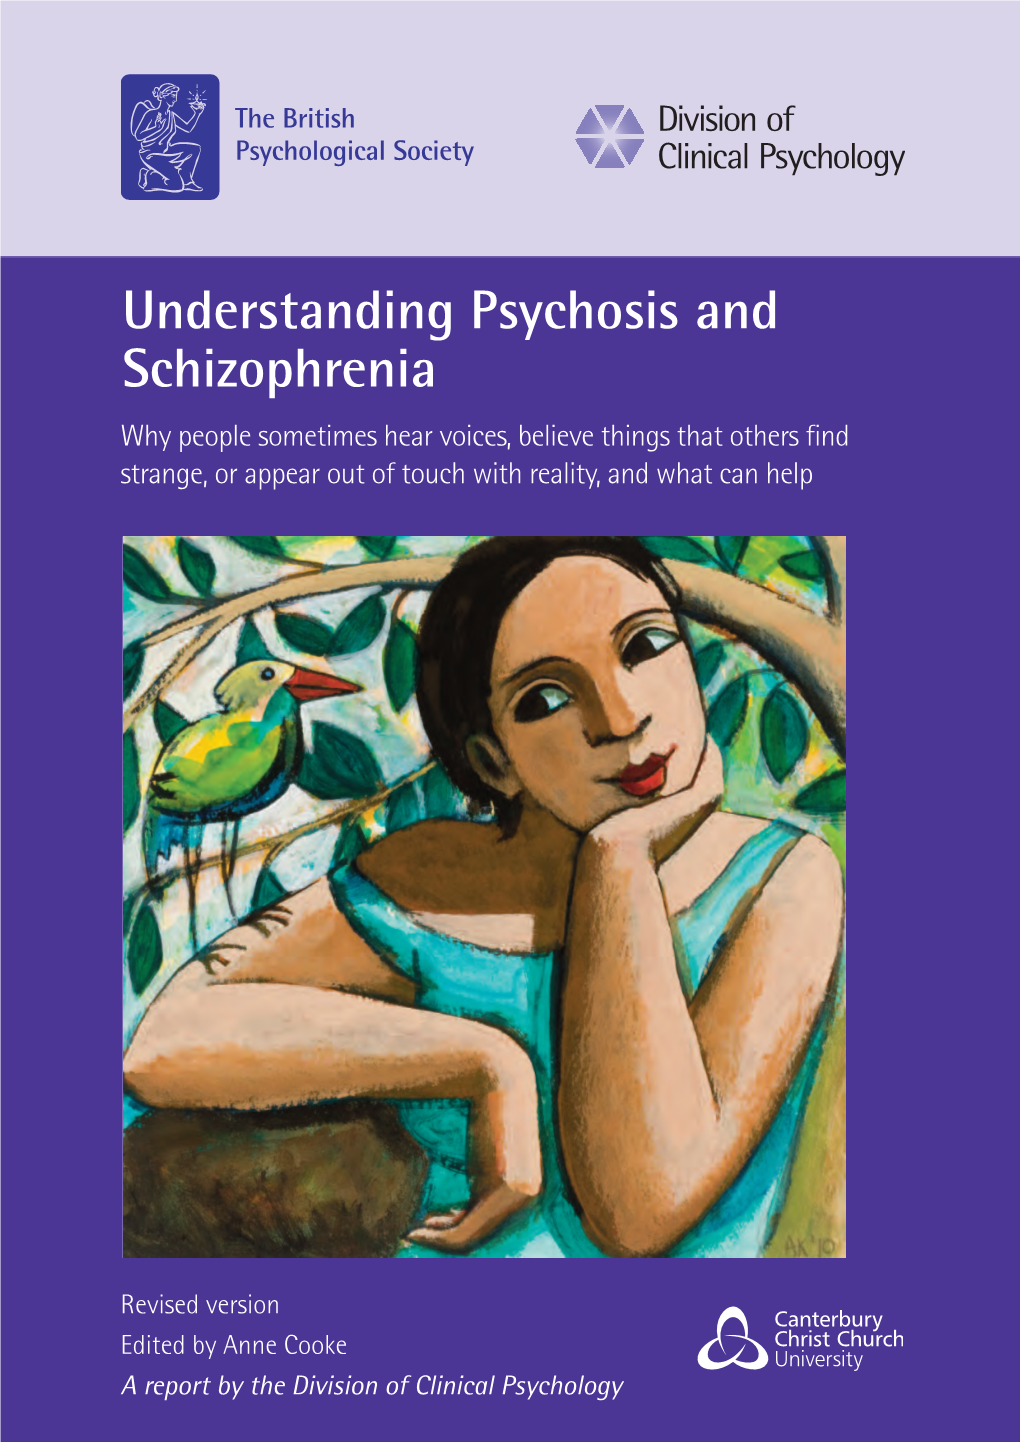 Understanding Psychosis and Schizophrenia